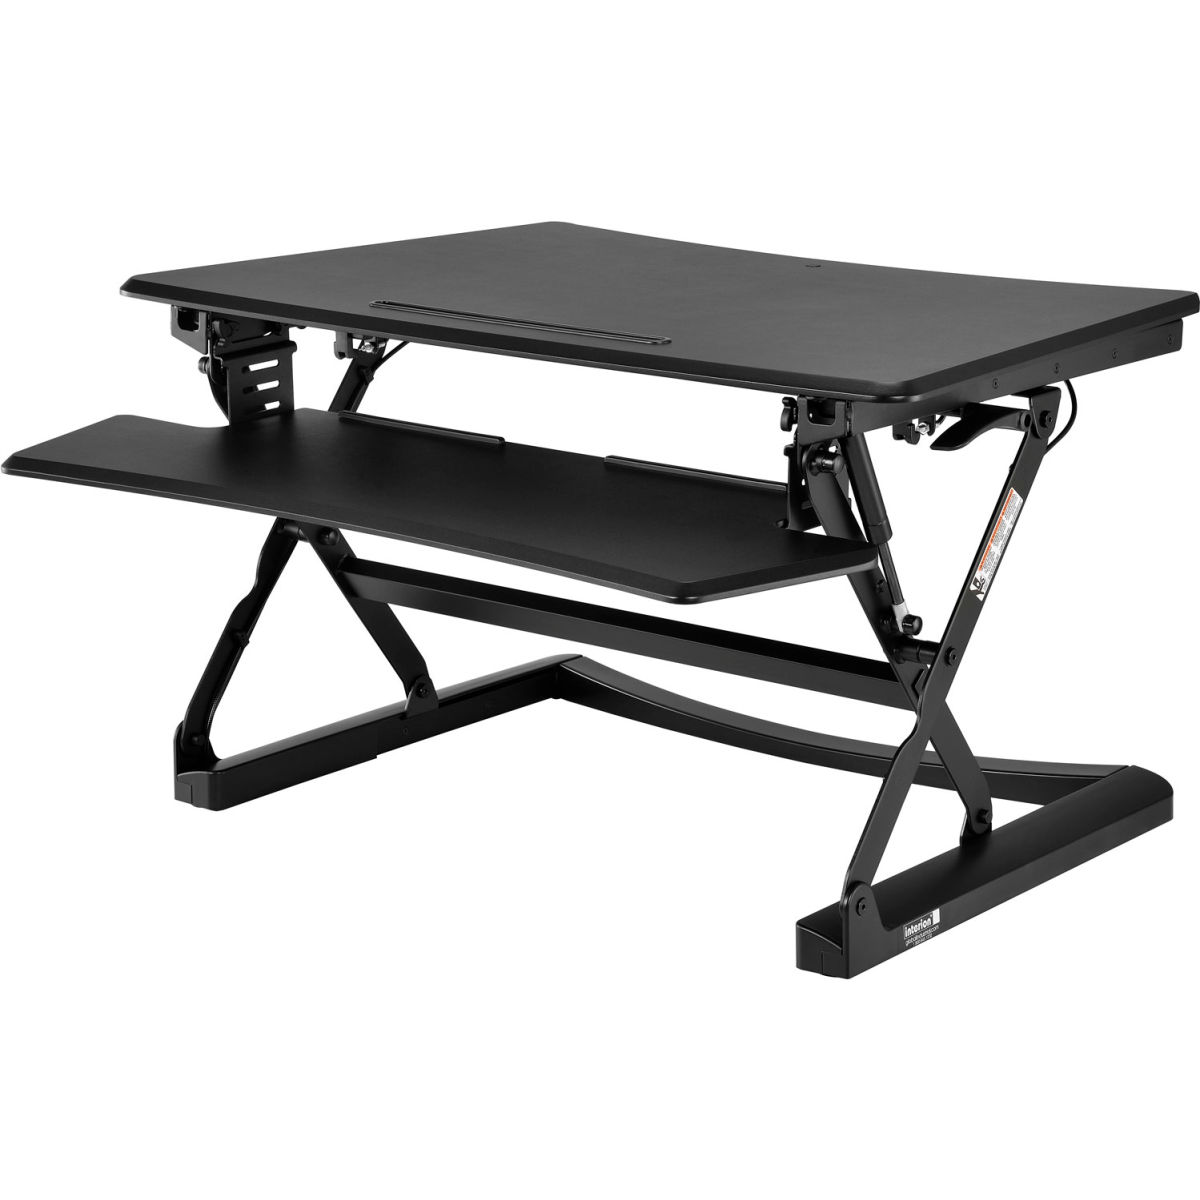 670167 Interion Height Adjustable Sit-Stand Desk Converter with Full Width Keyboard -  Loctek Ergonomic Technology